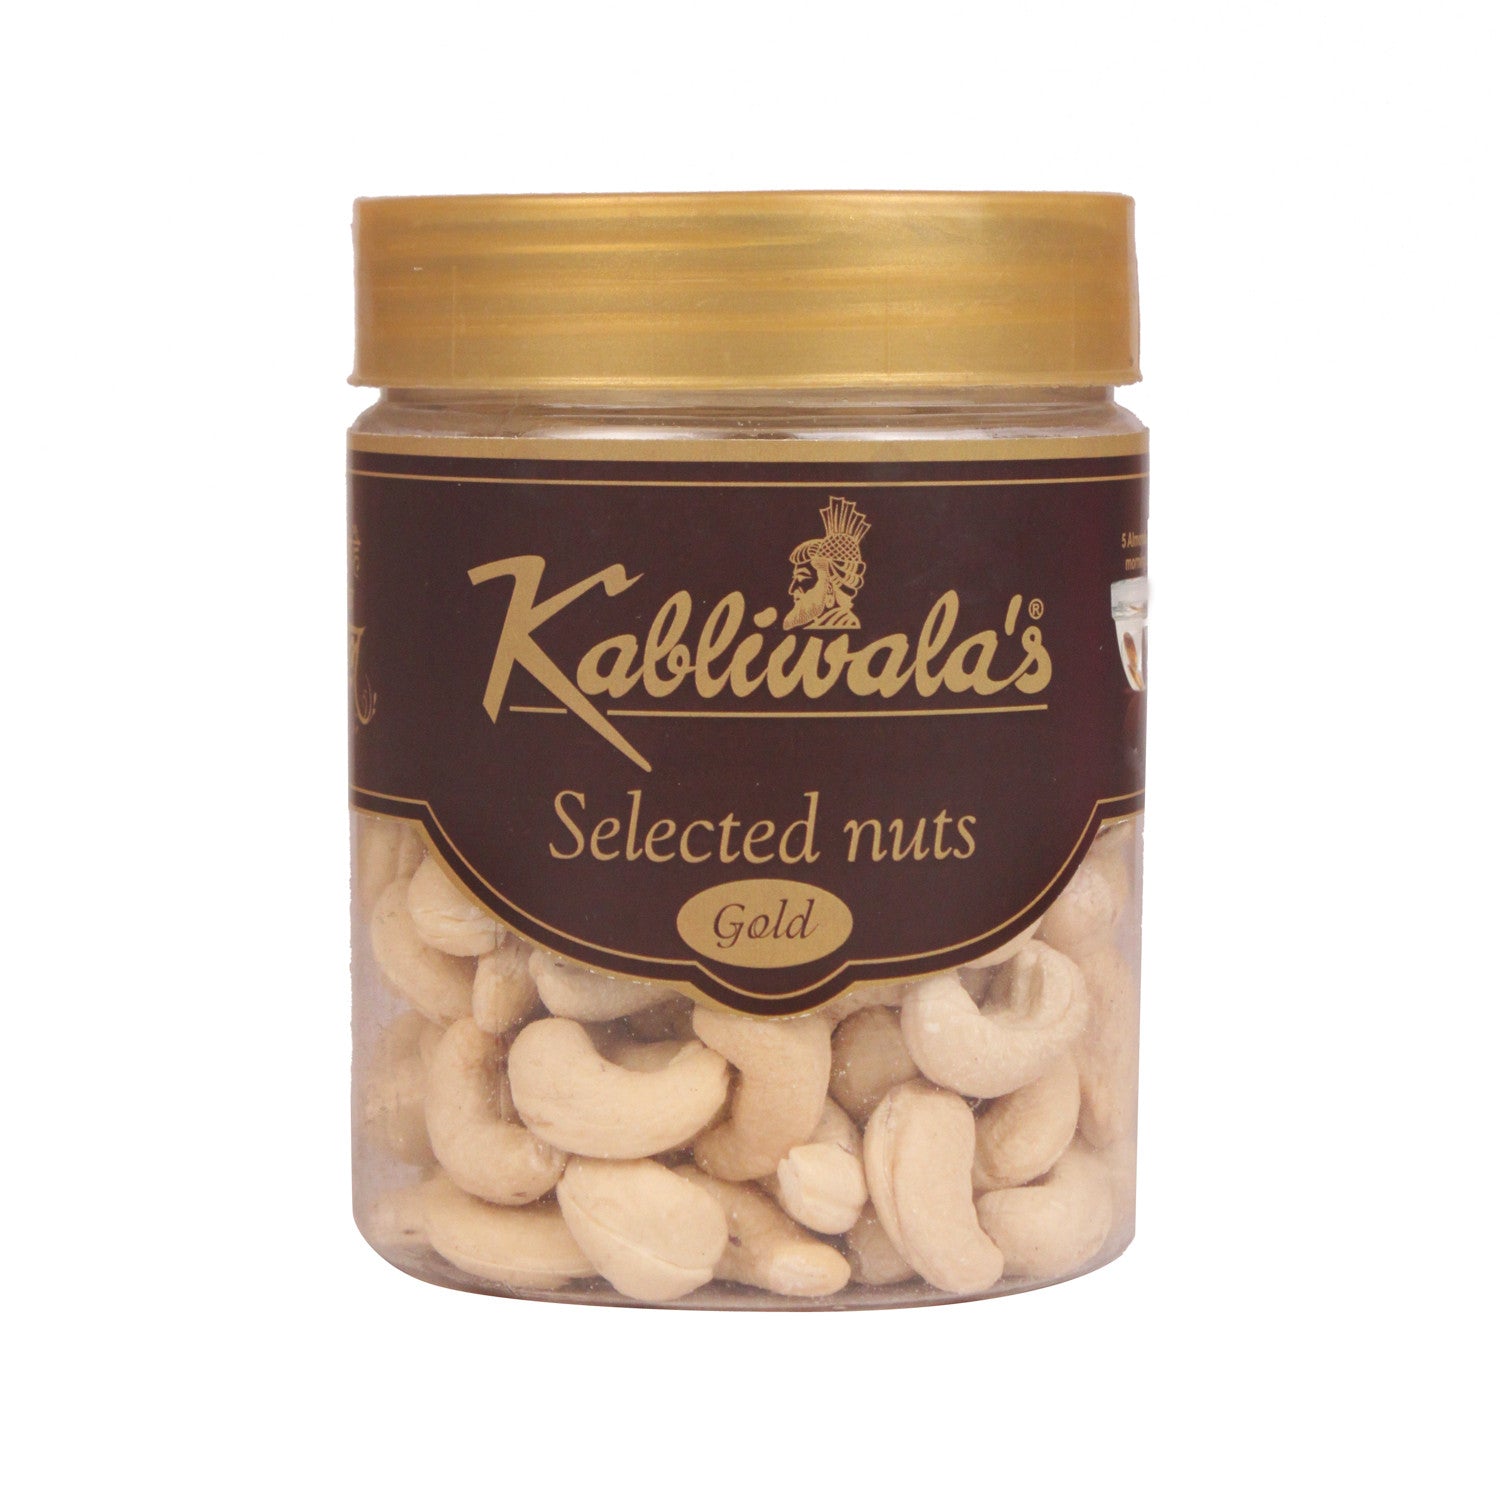 Kaju Gold / Cashew nut Gold - Kabliwala's